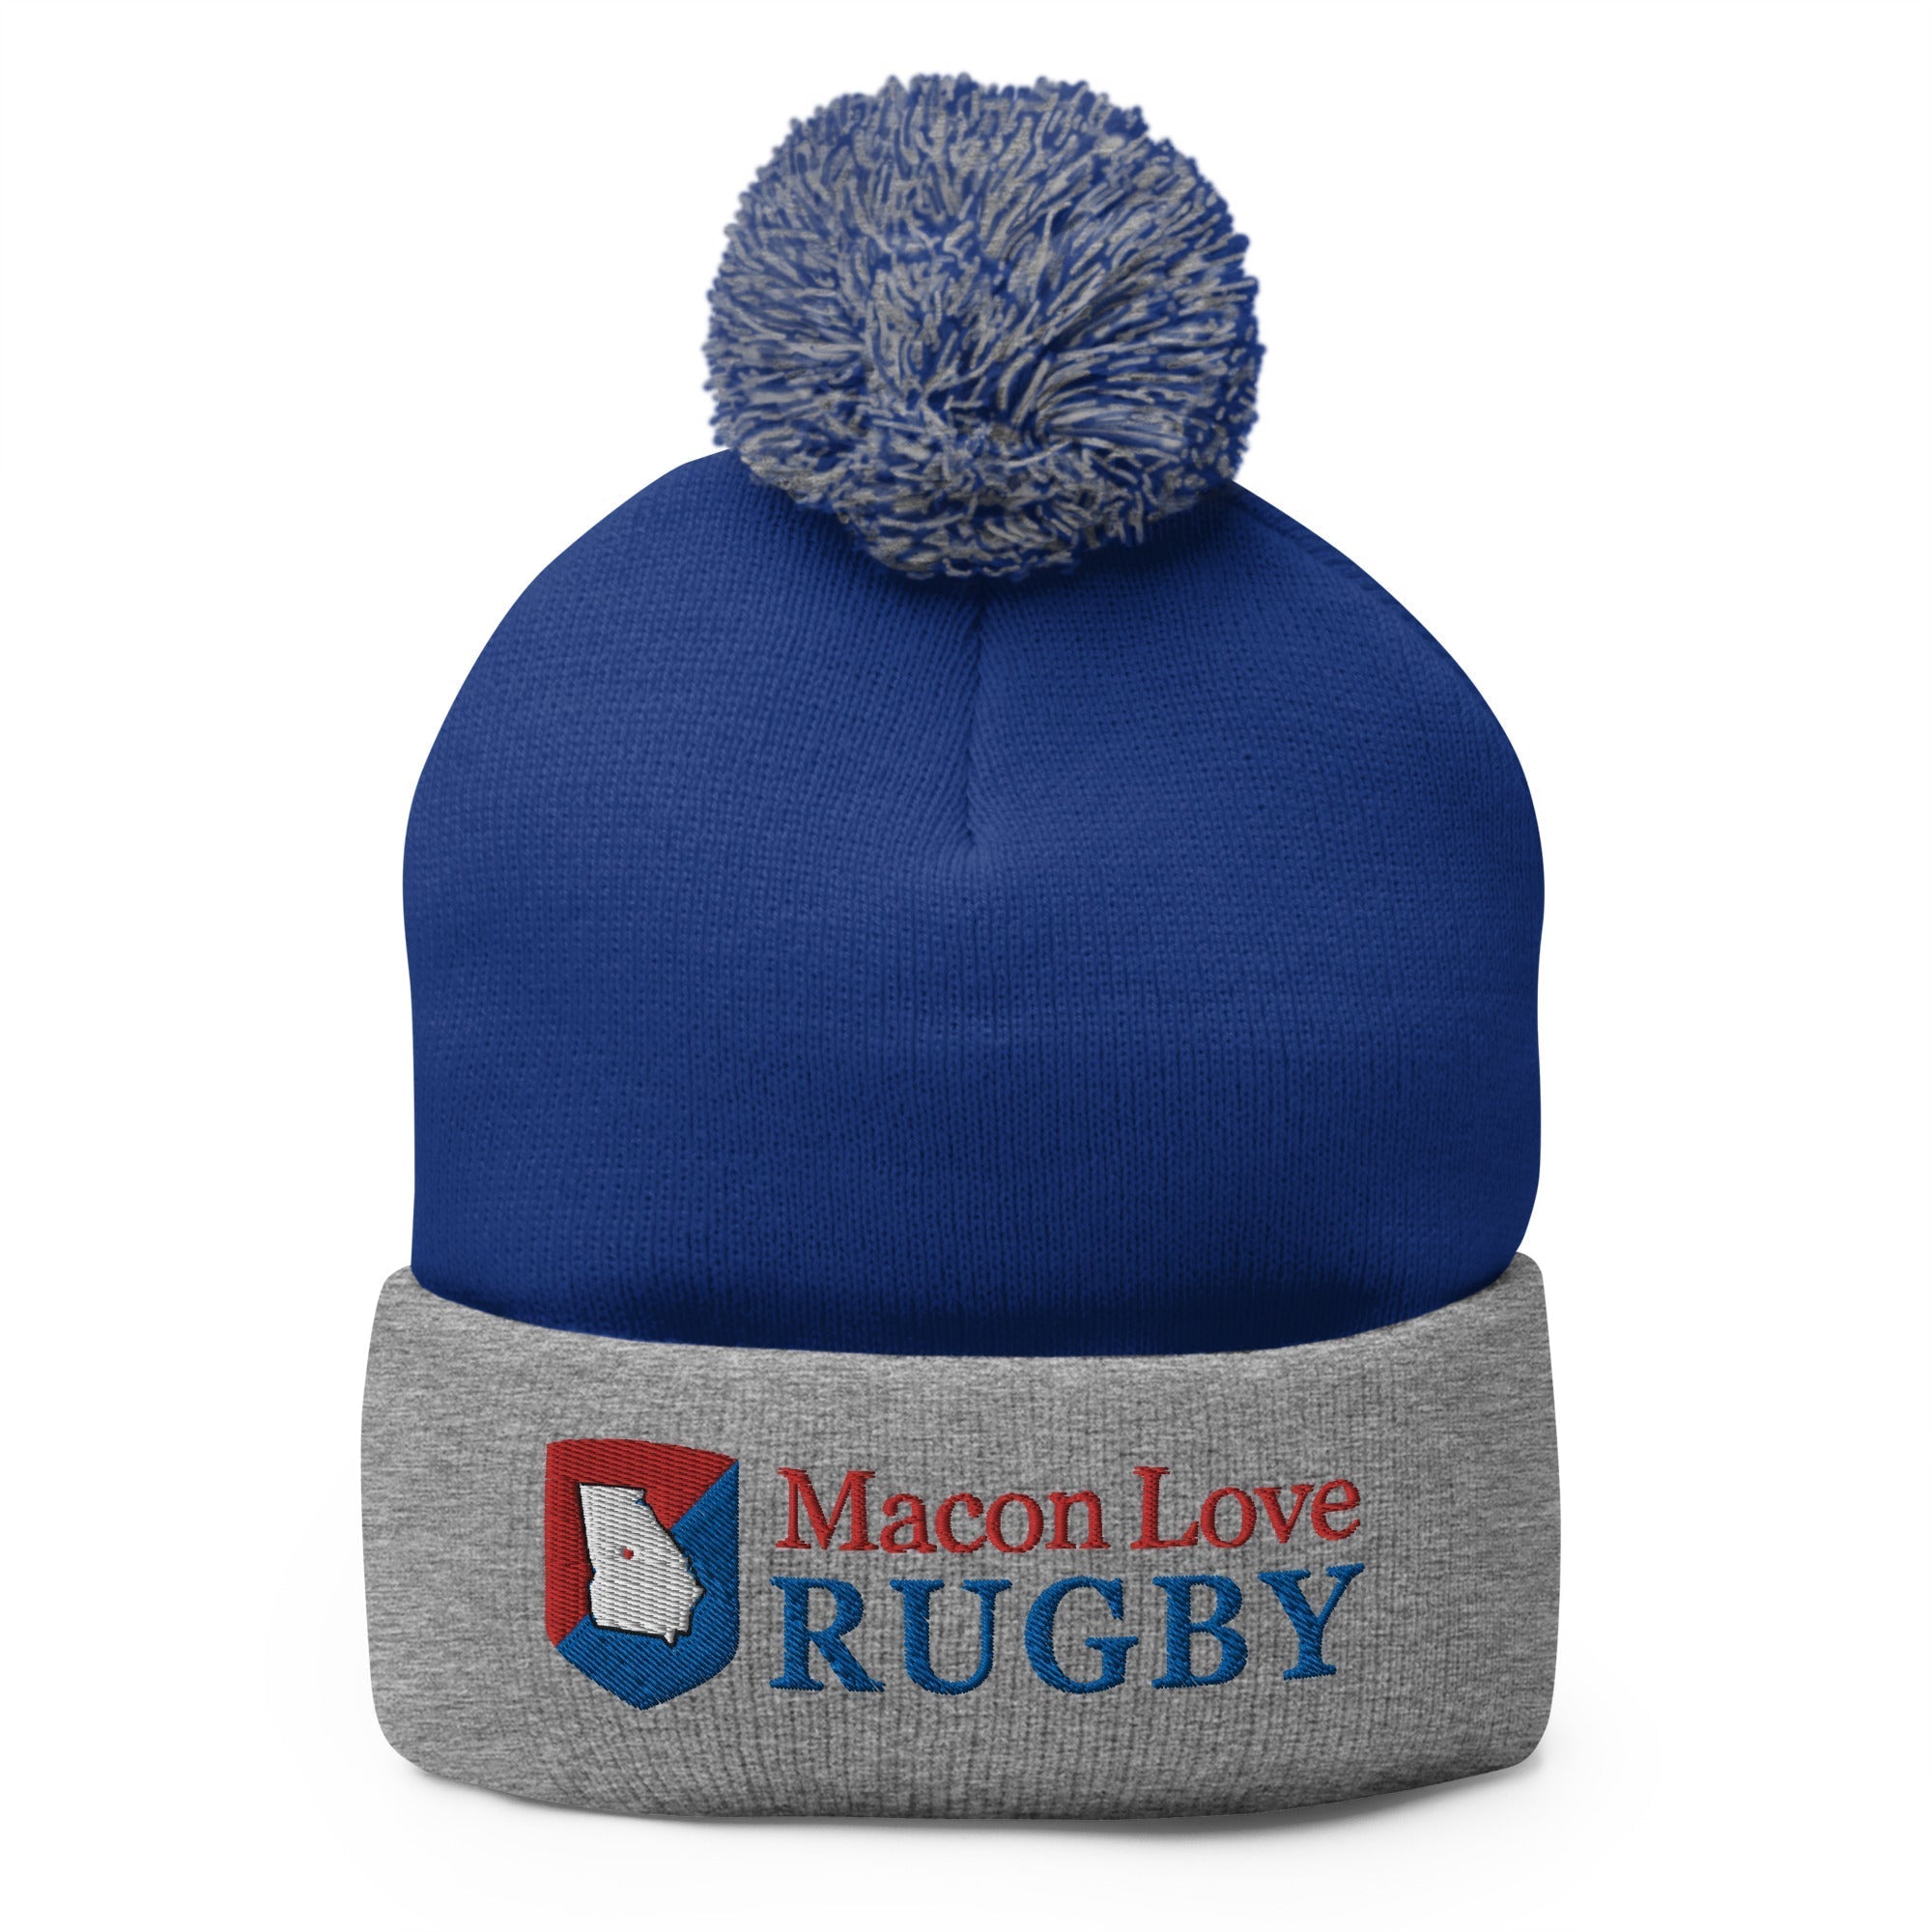 Rugby Imports Macon Love Rugby Pom-Pom Beanie